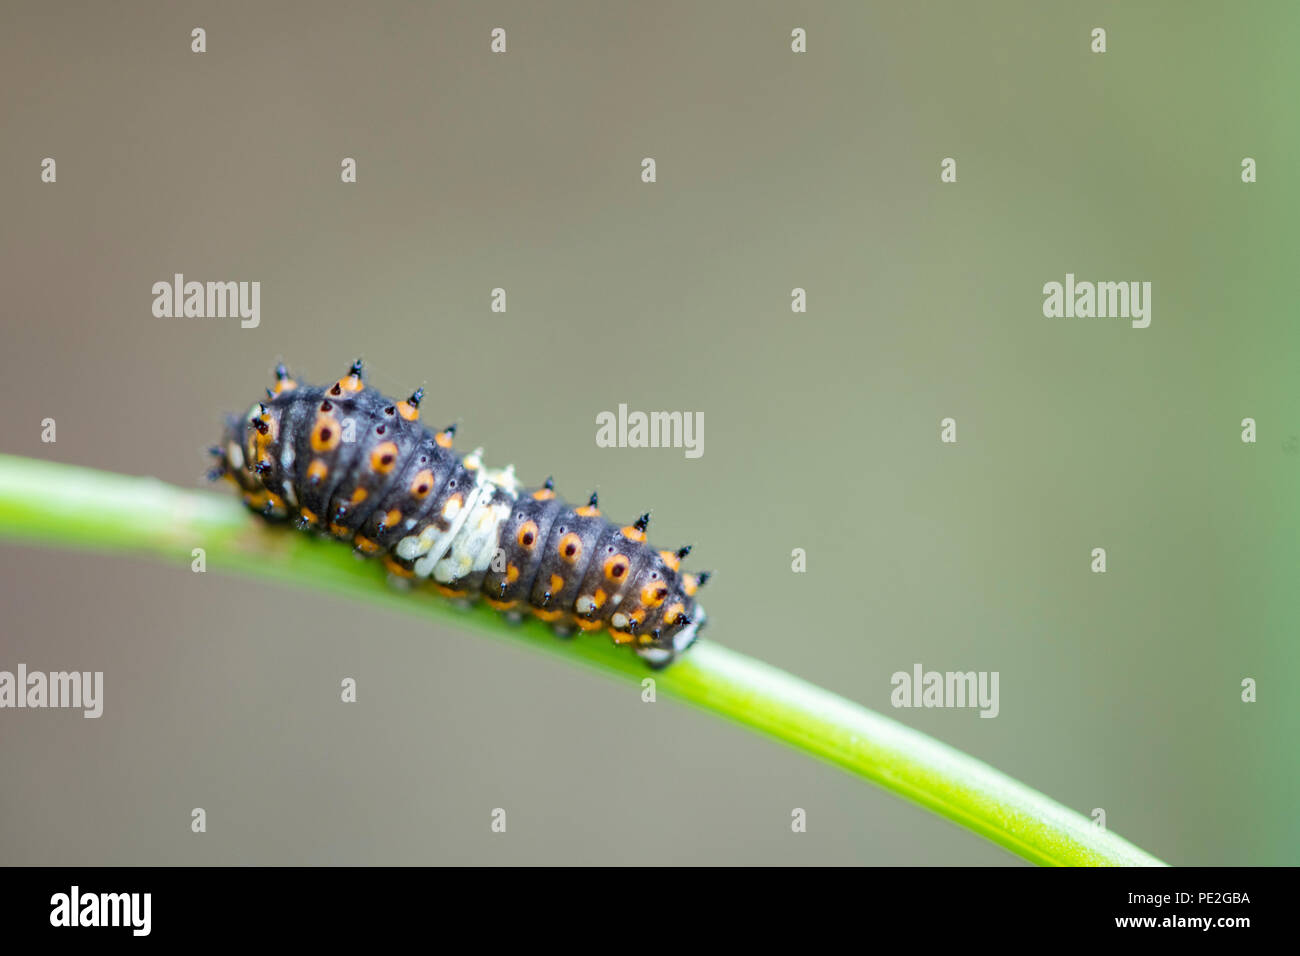 Este especie caterpillar de eneldo. Foto de stock